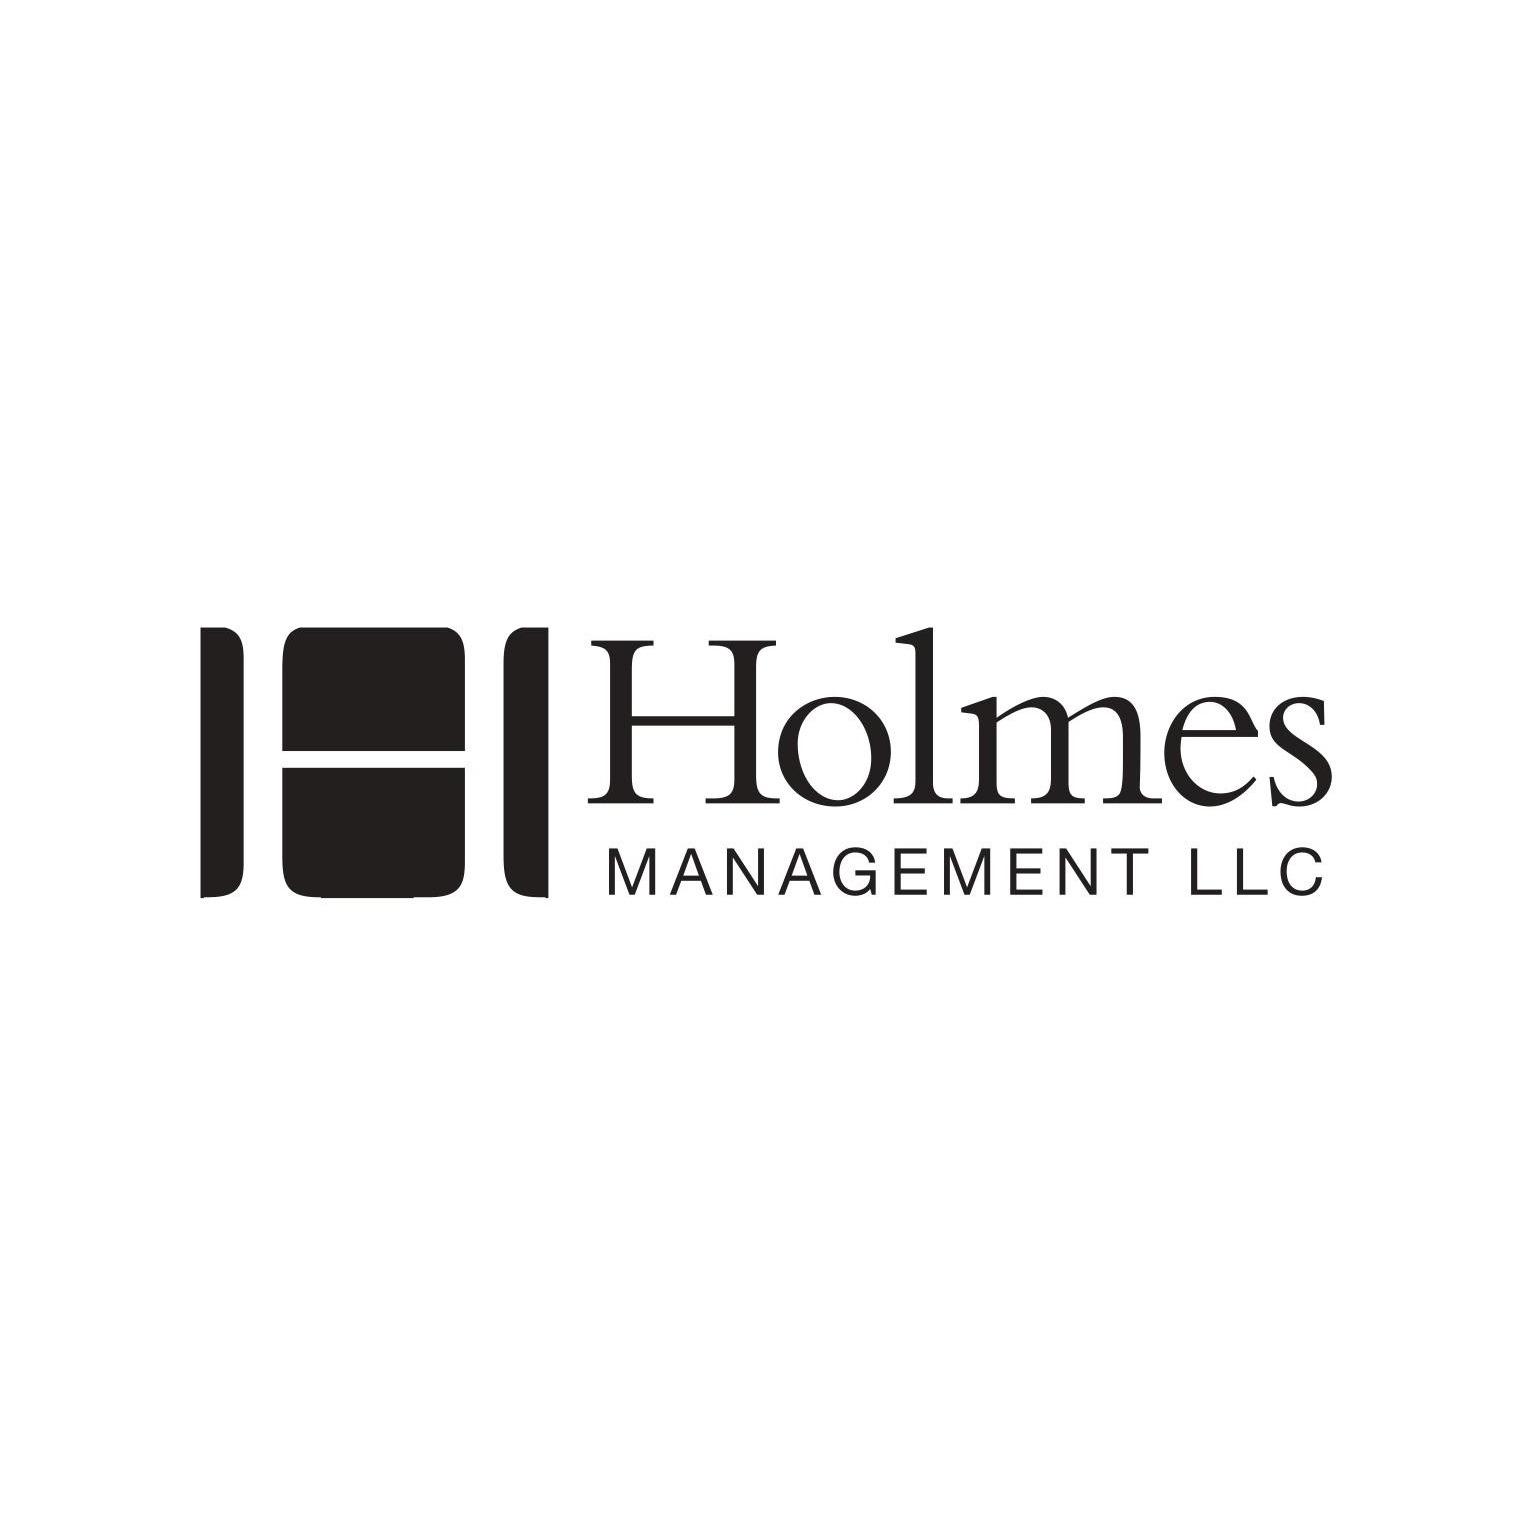 Holmes Management LLC